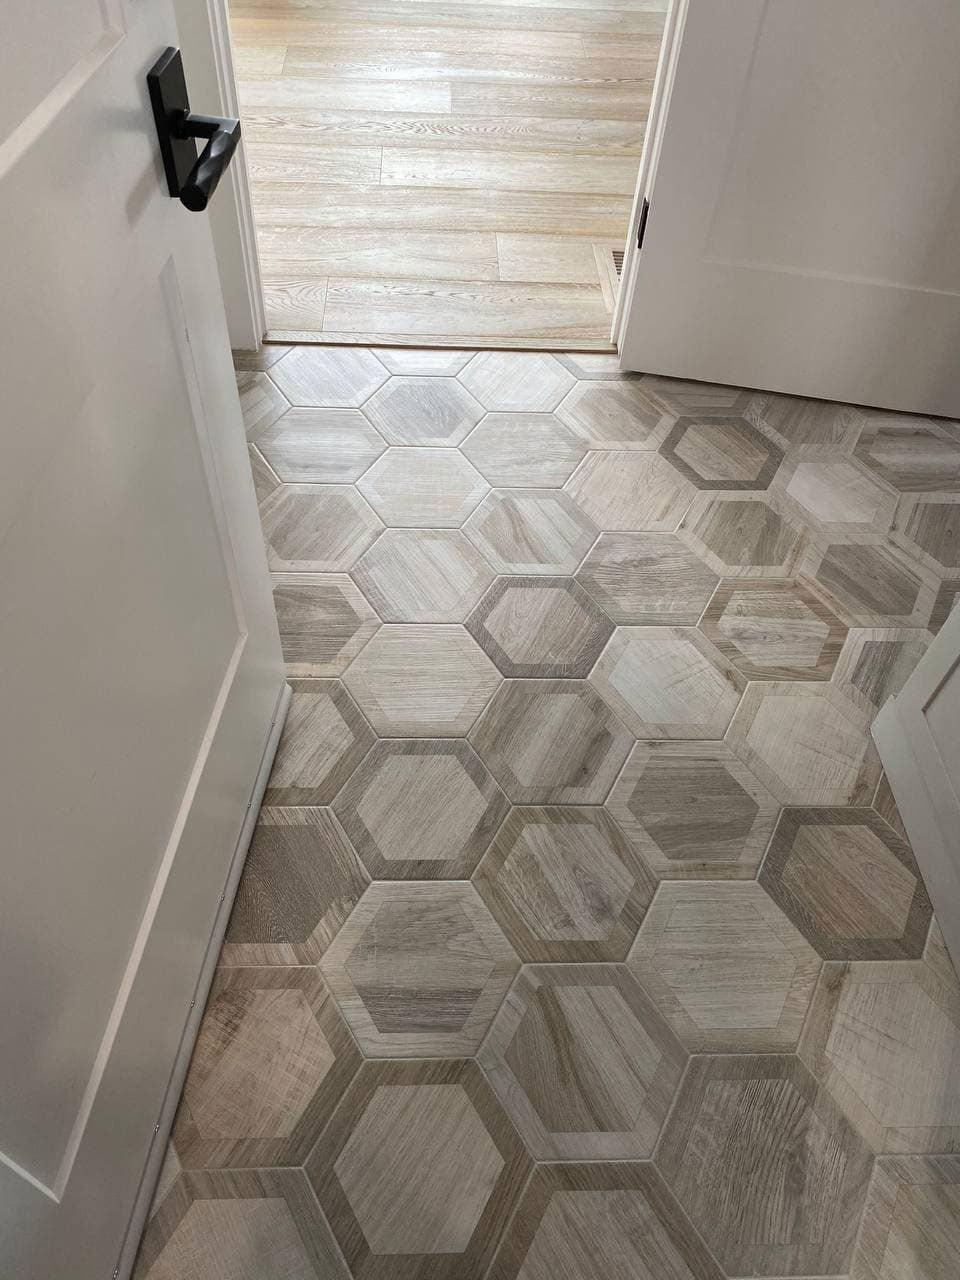 Esagona Intarcio Silver Wooden Look Porcelain Tile Mud Room Floor in a Hexagon Pattern